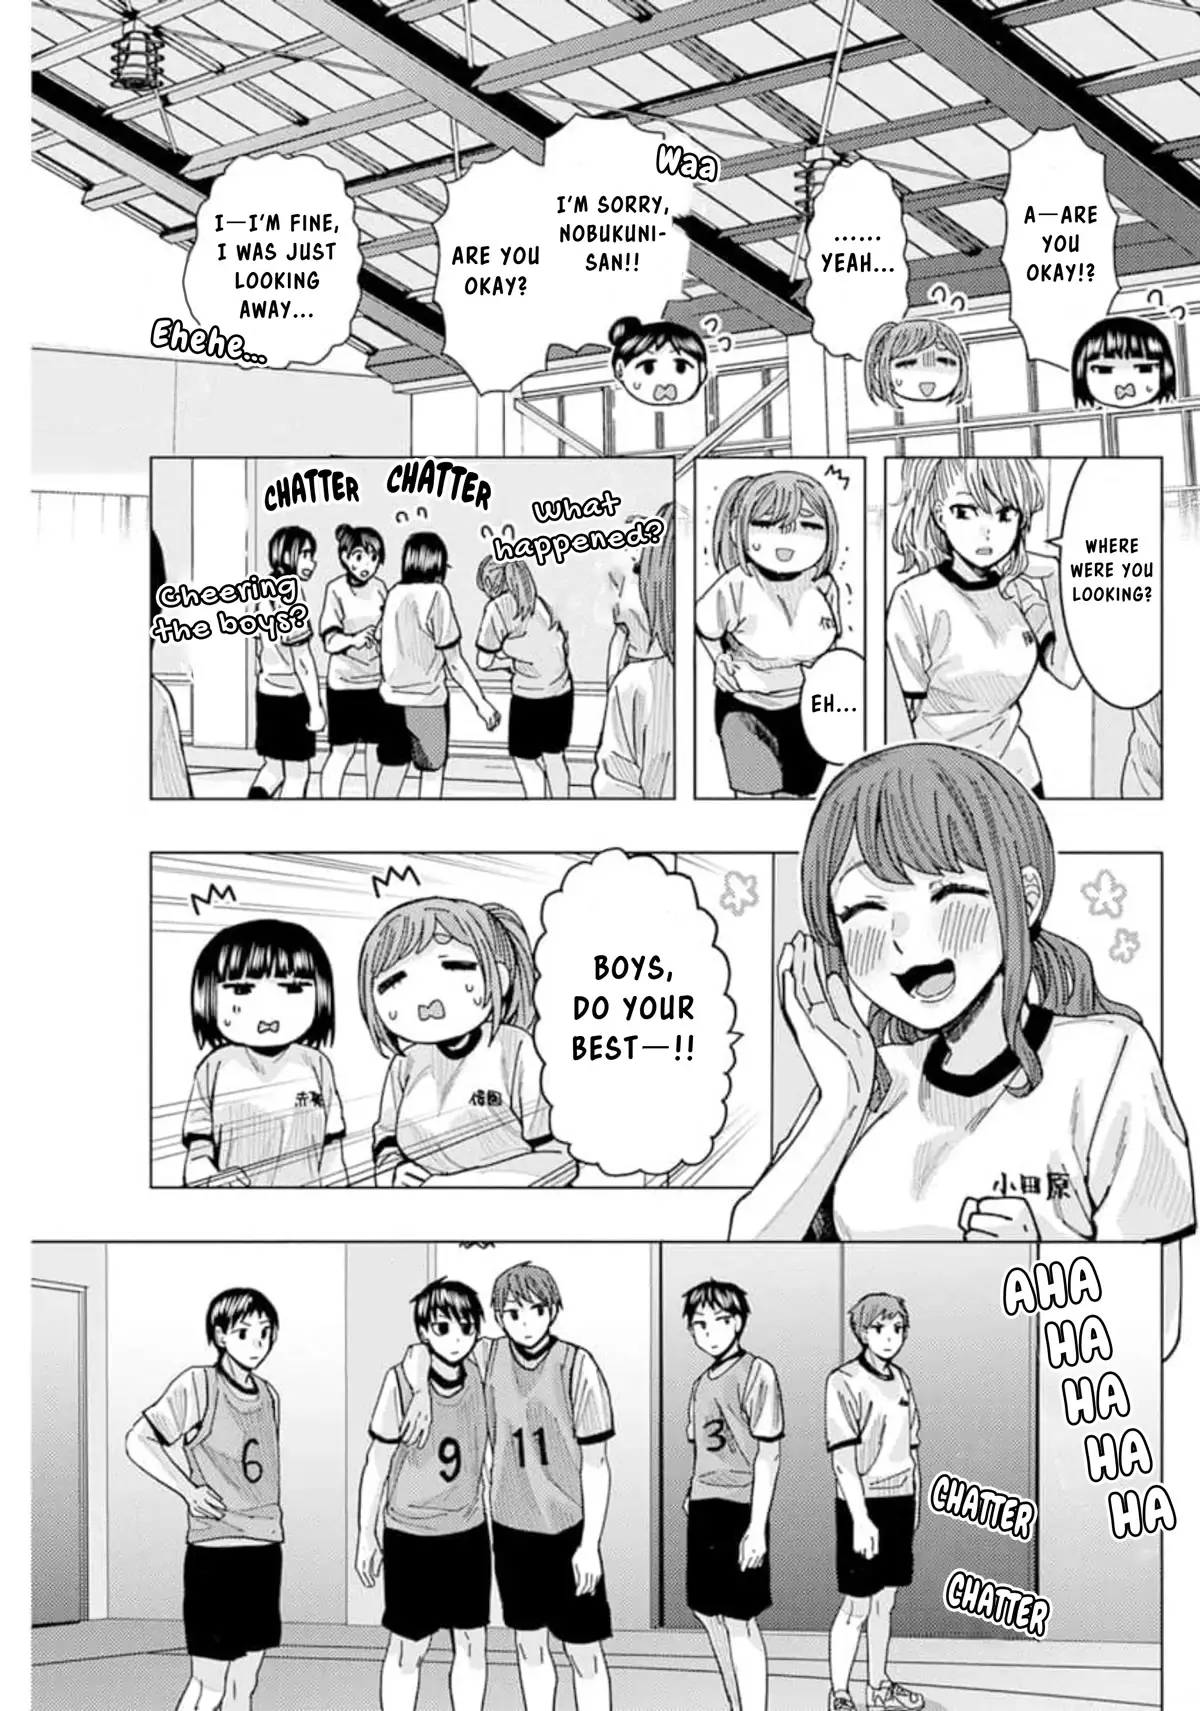 "nobukuni-San" Does She Like Me? - 22 page 8-6b902d57